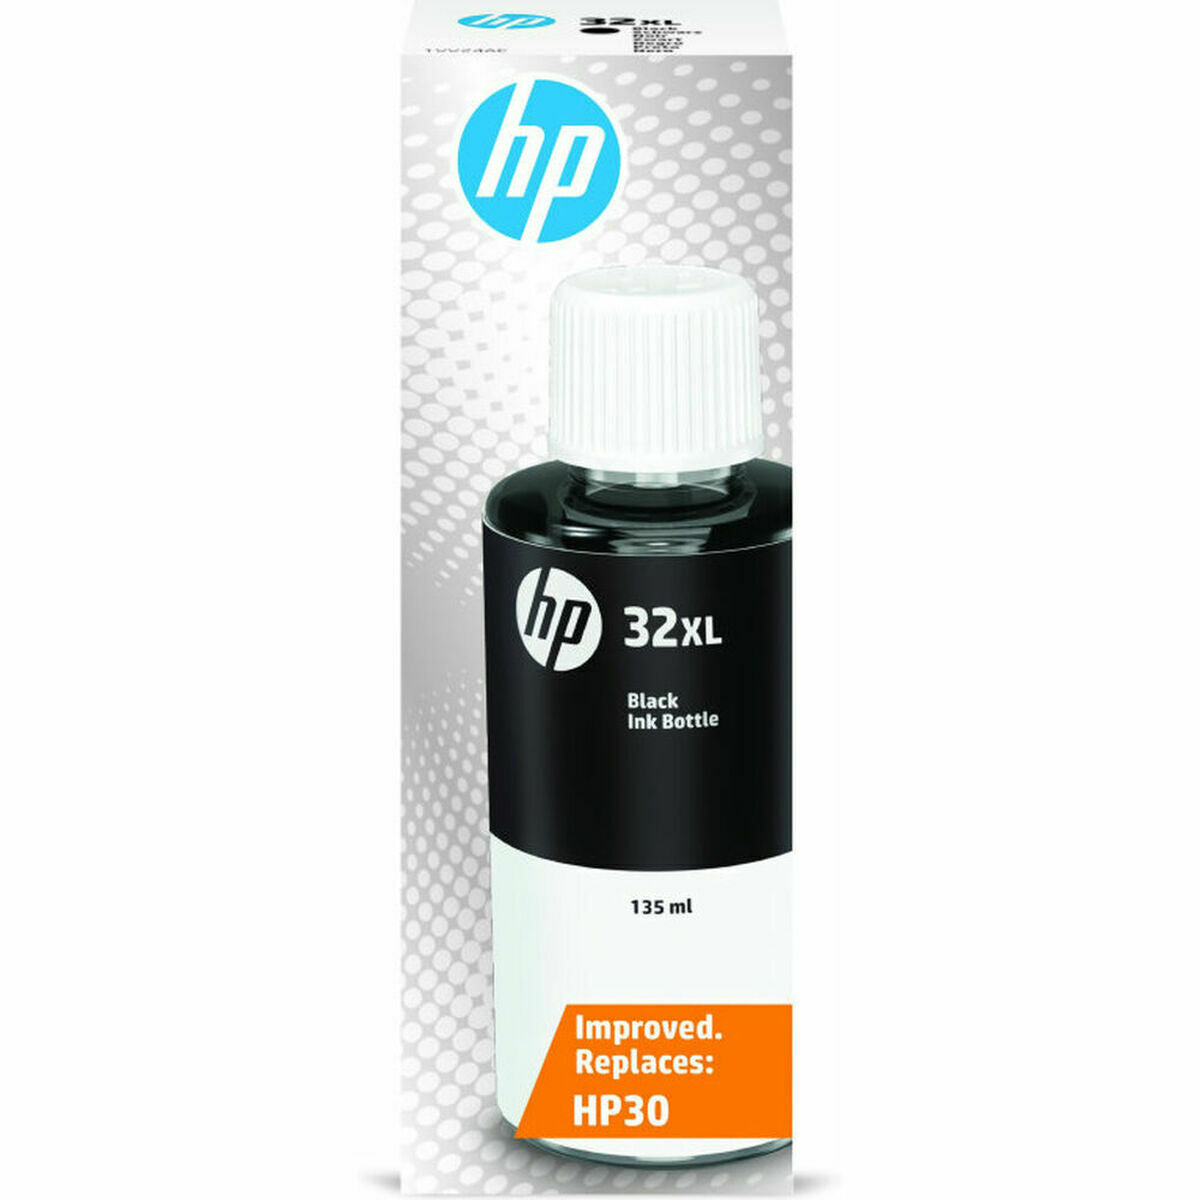 Refill ink HP 32XL Black